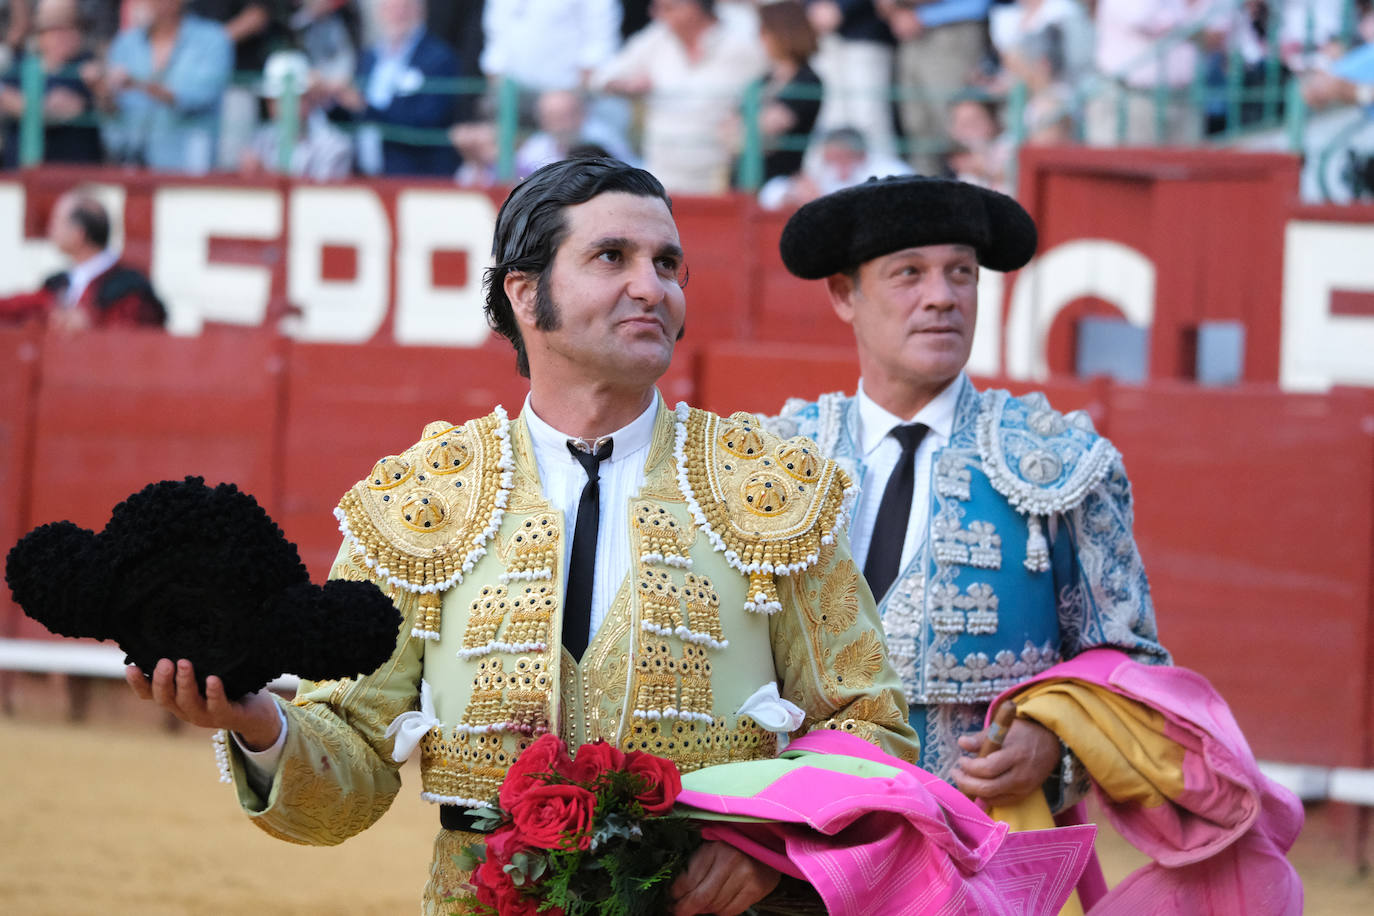 Fotos: la maravillosa faena de Morante en Jerez